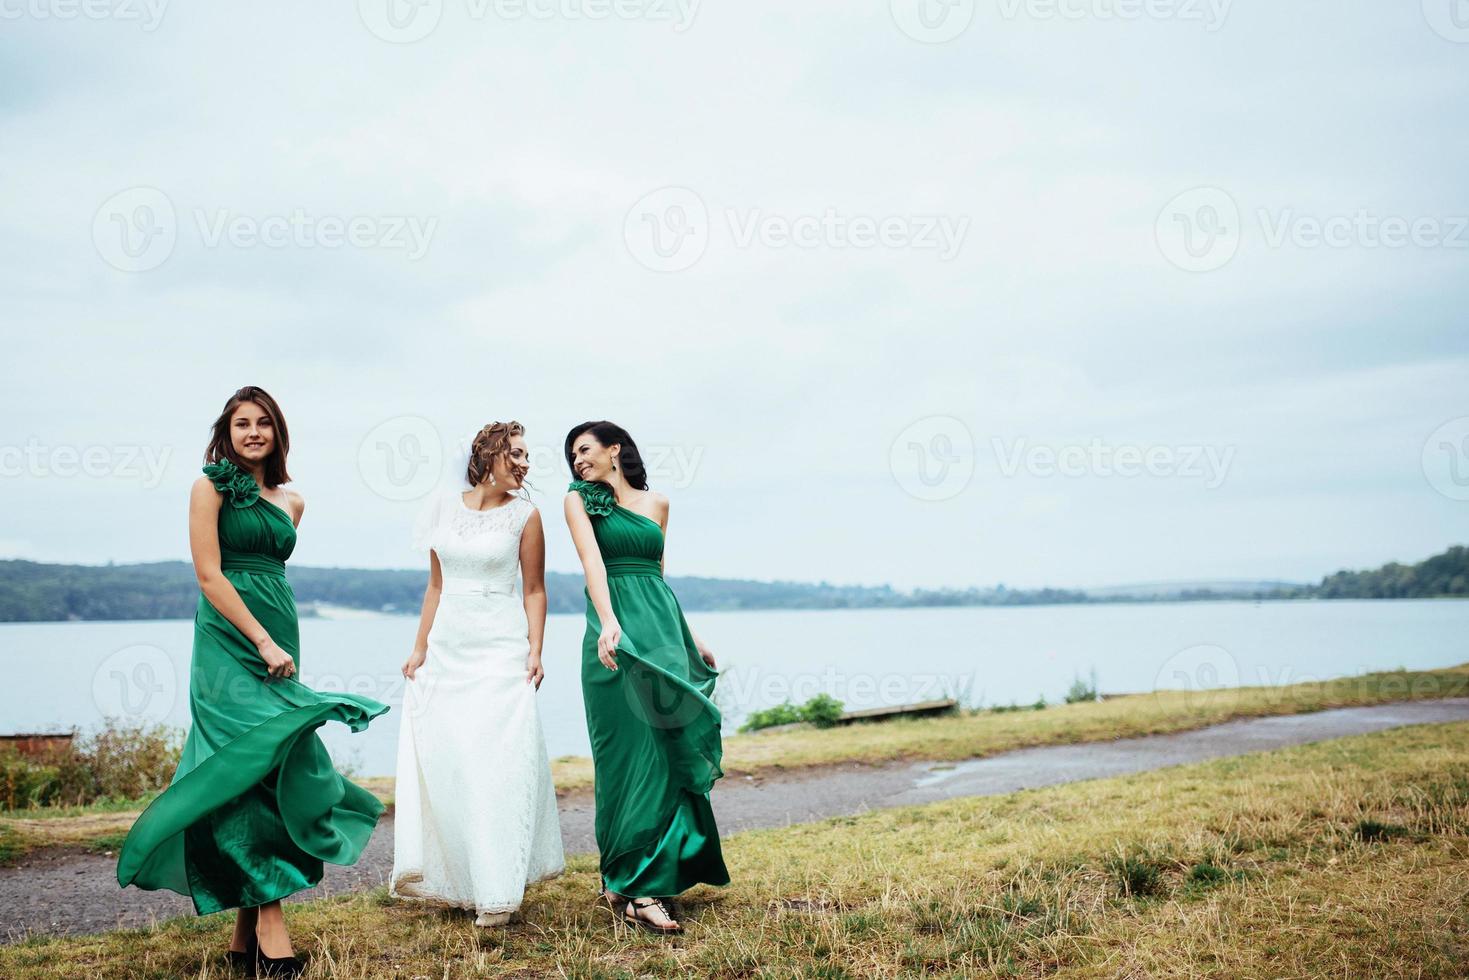 gruppo sposa matrimonio estate all'aperto. ucraina europa foto